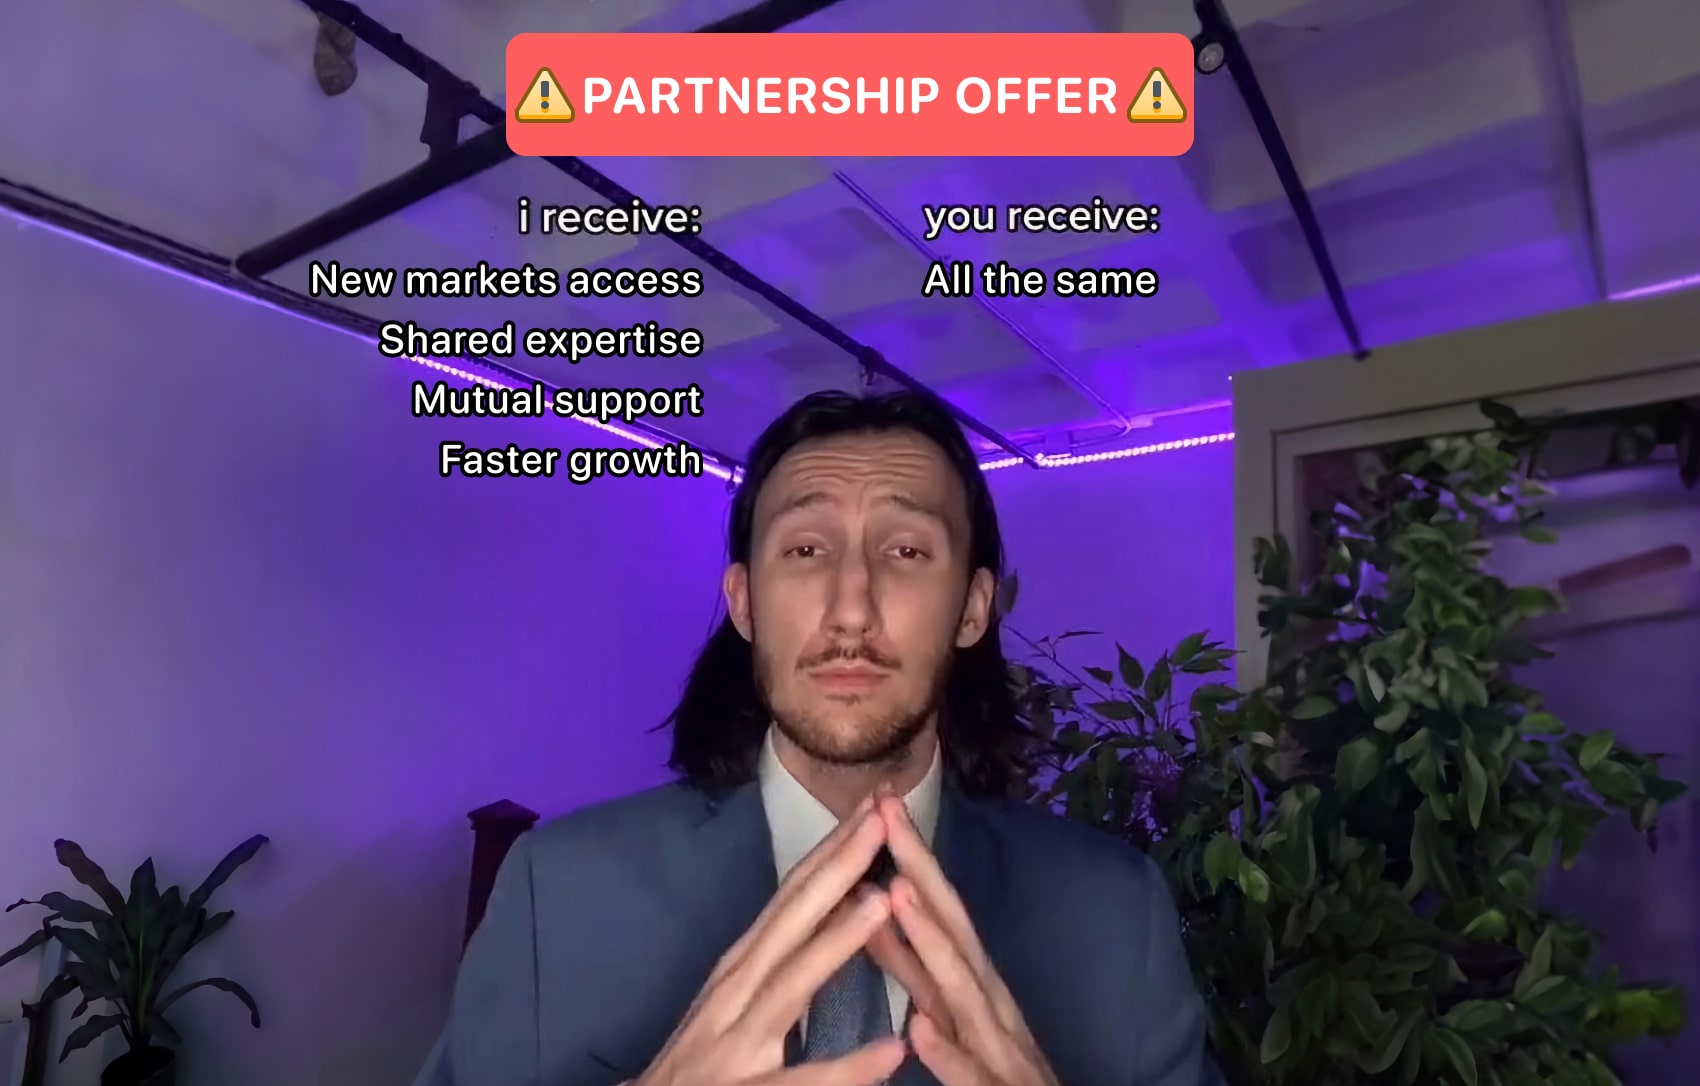 Advantages of the partnership